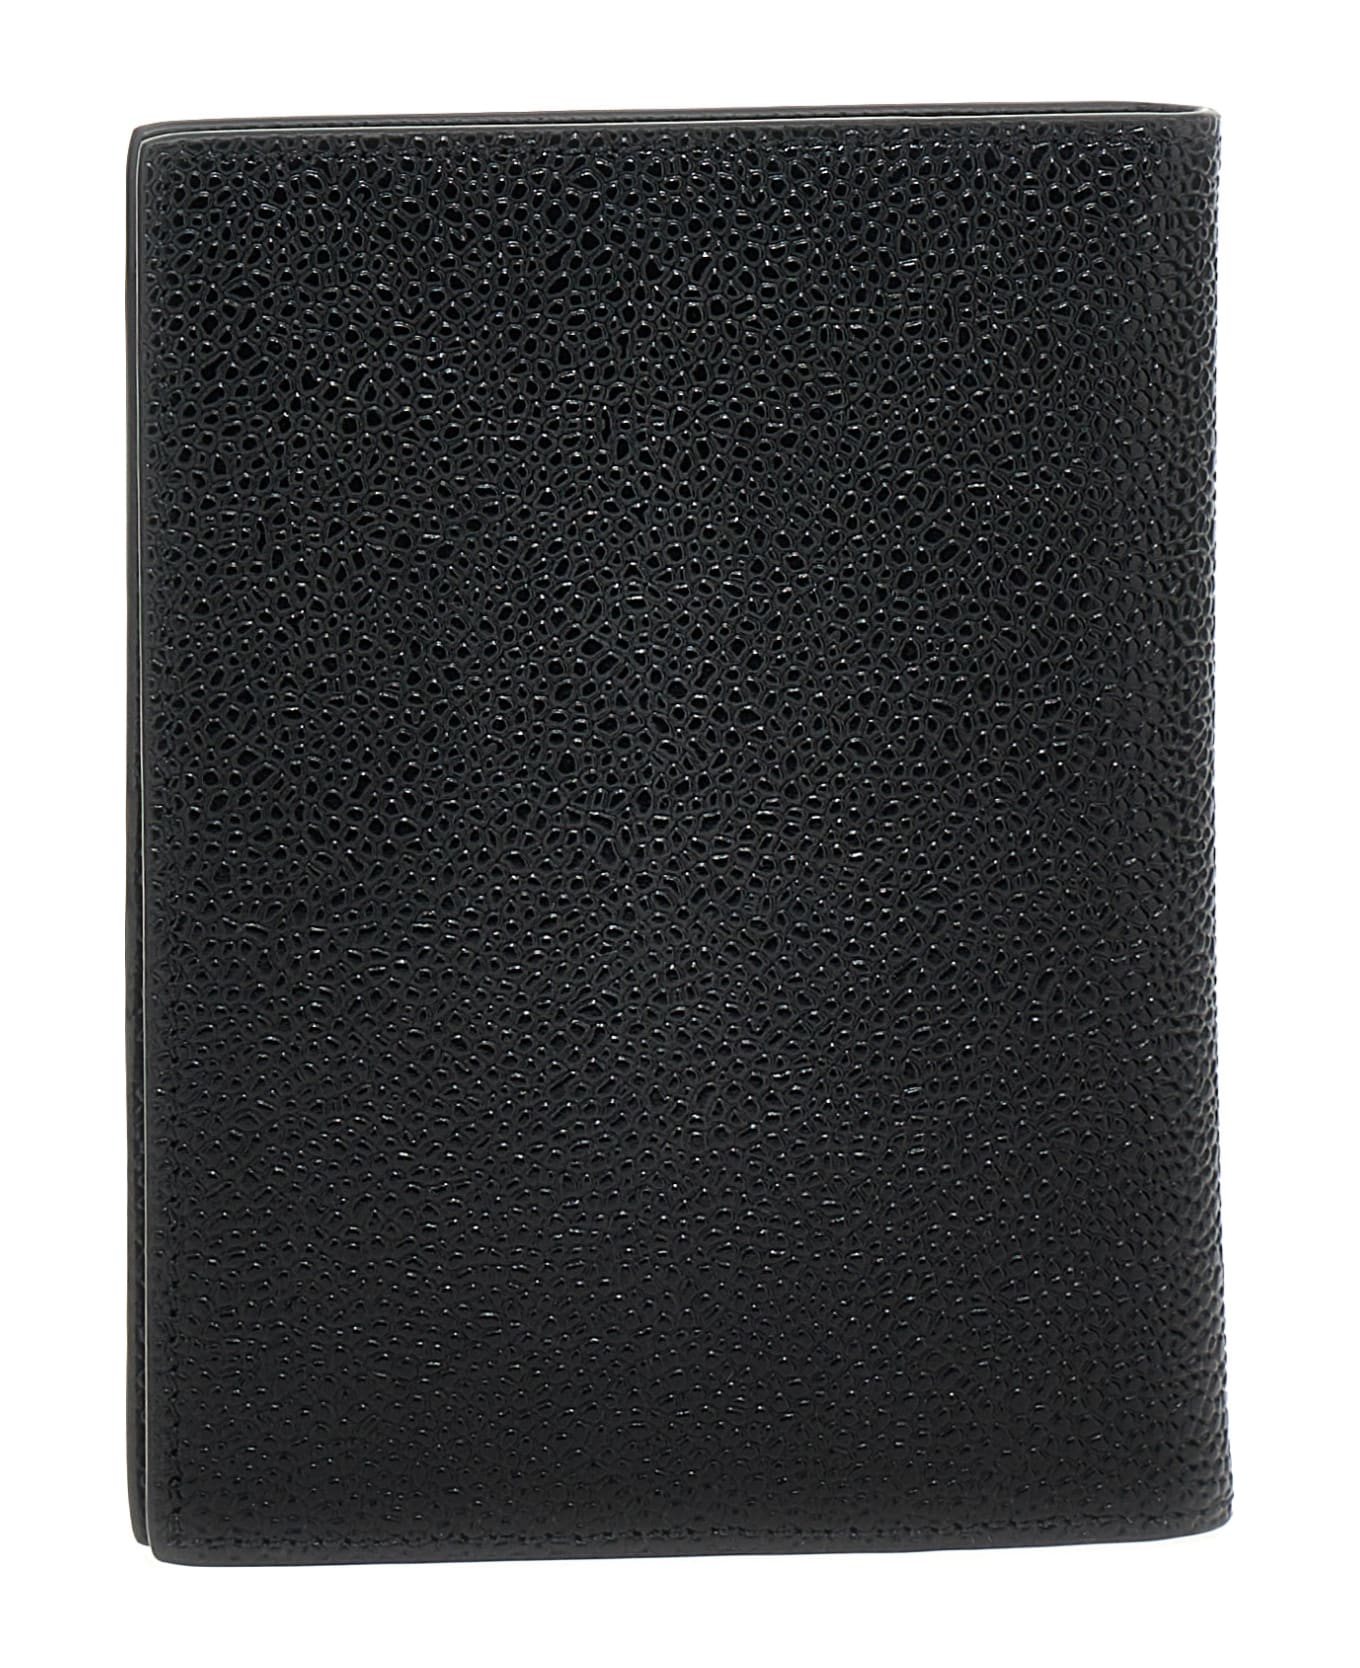 Thom Browne Passport Holder In Pebble Grain - Black